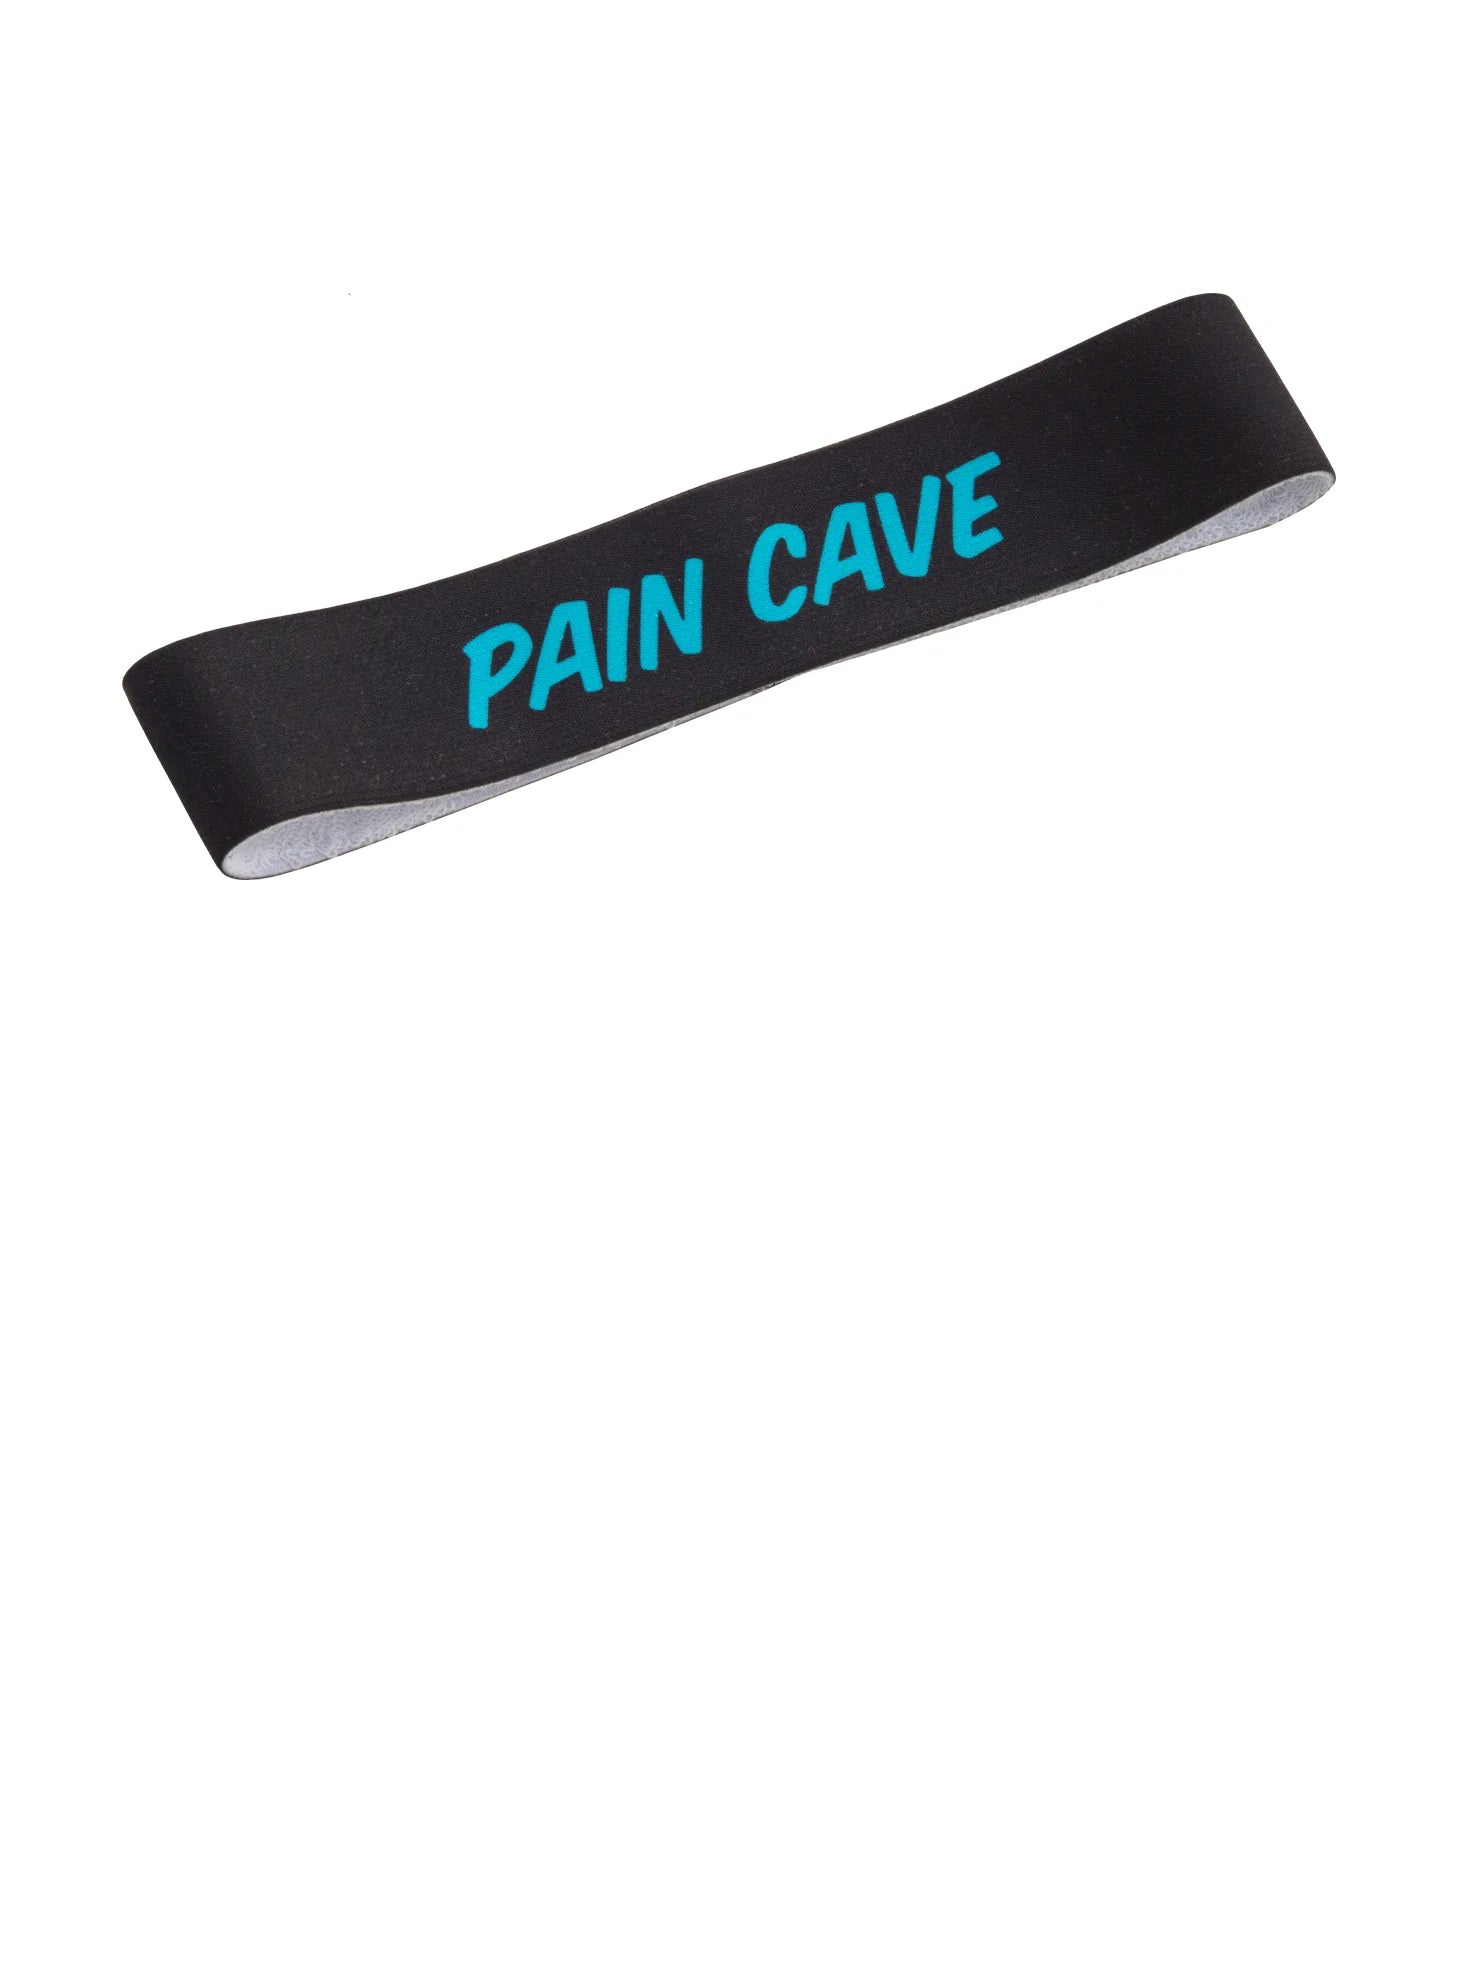 PAIN CAVE KIT With FREE TURBO Towel & Headband - WOMEN BLACK